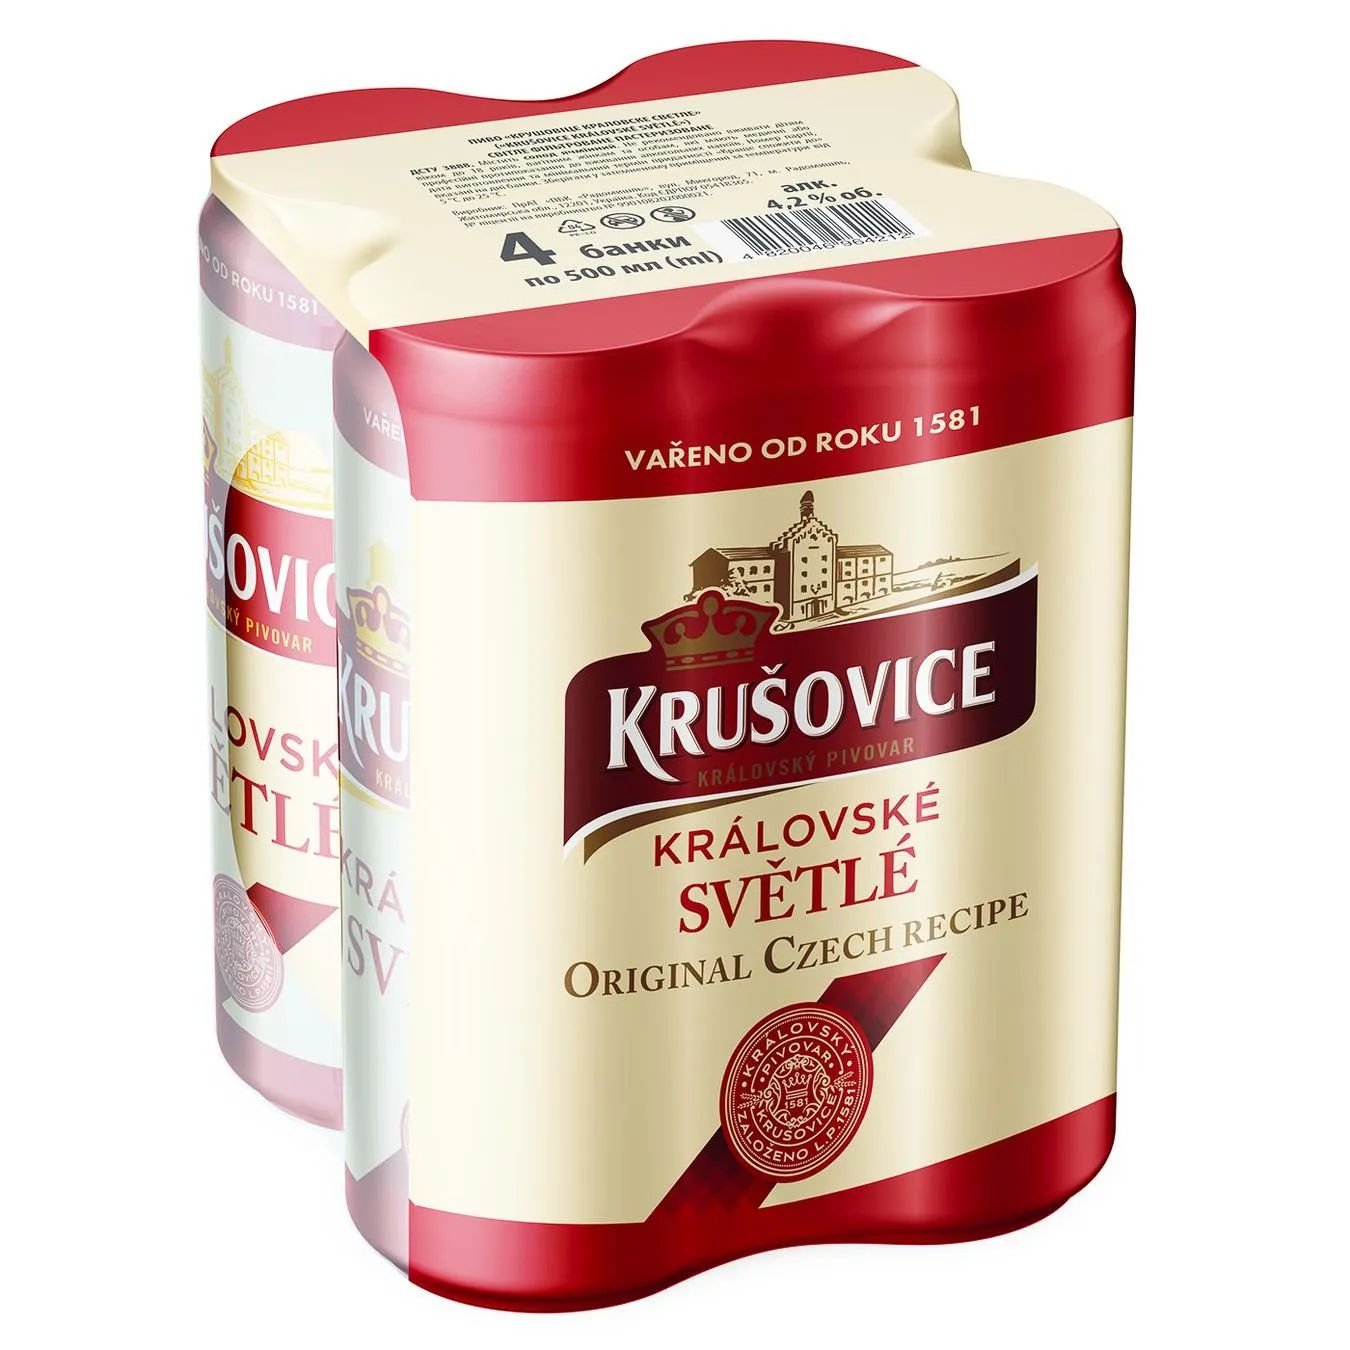 Пиво Krusovice Kralovske Svetle, светлое, ж/б, 4,2%, 2 л (4 шт. по 0,5 л) - фото 1